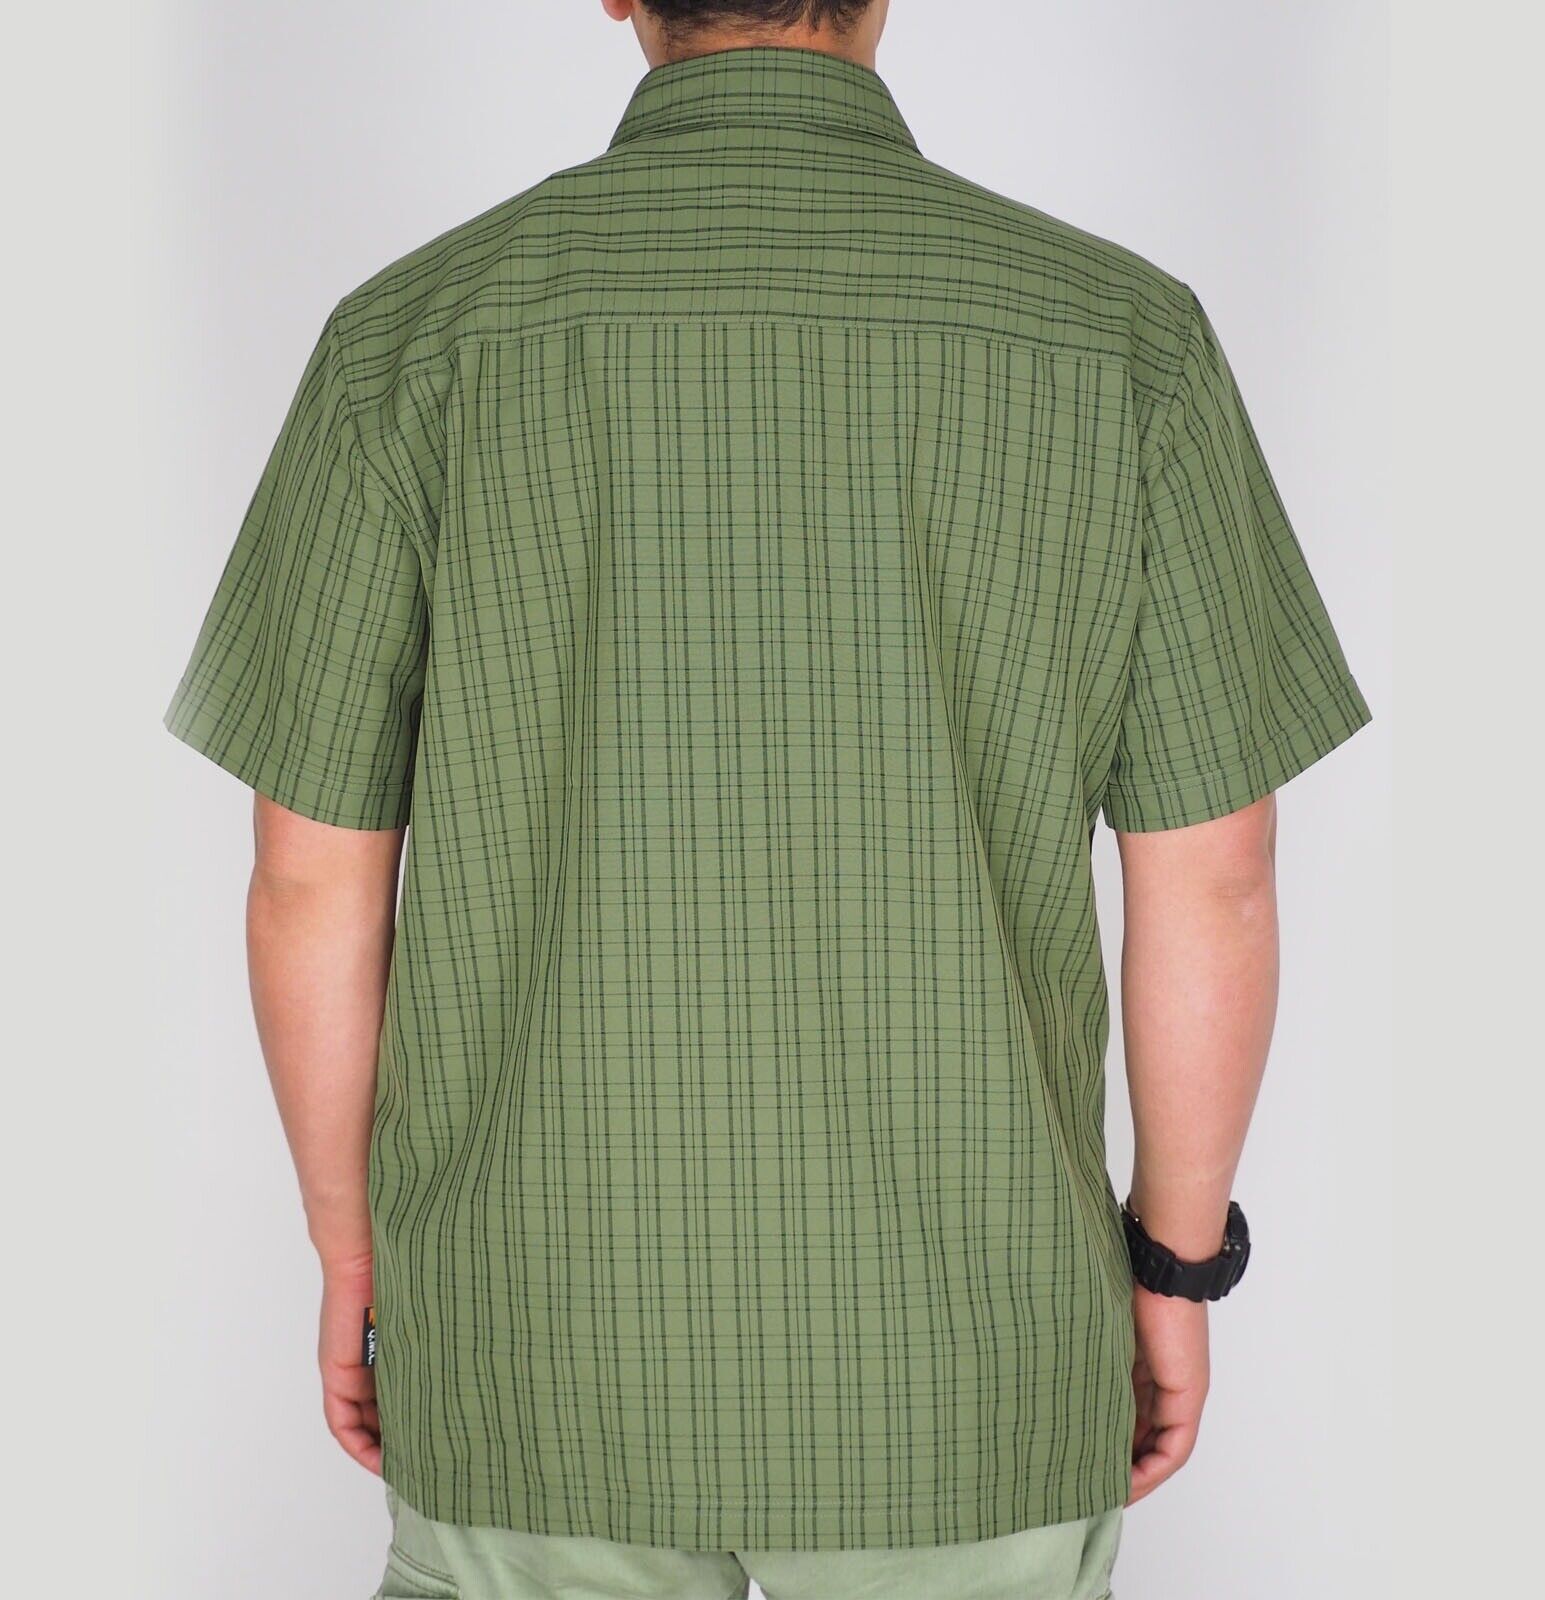 Mens Jack Wolfskin Thompson 1401041 Burnt Olive Short Sleeved Shirt - London Top Style